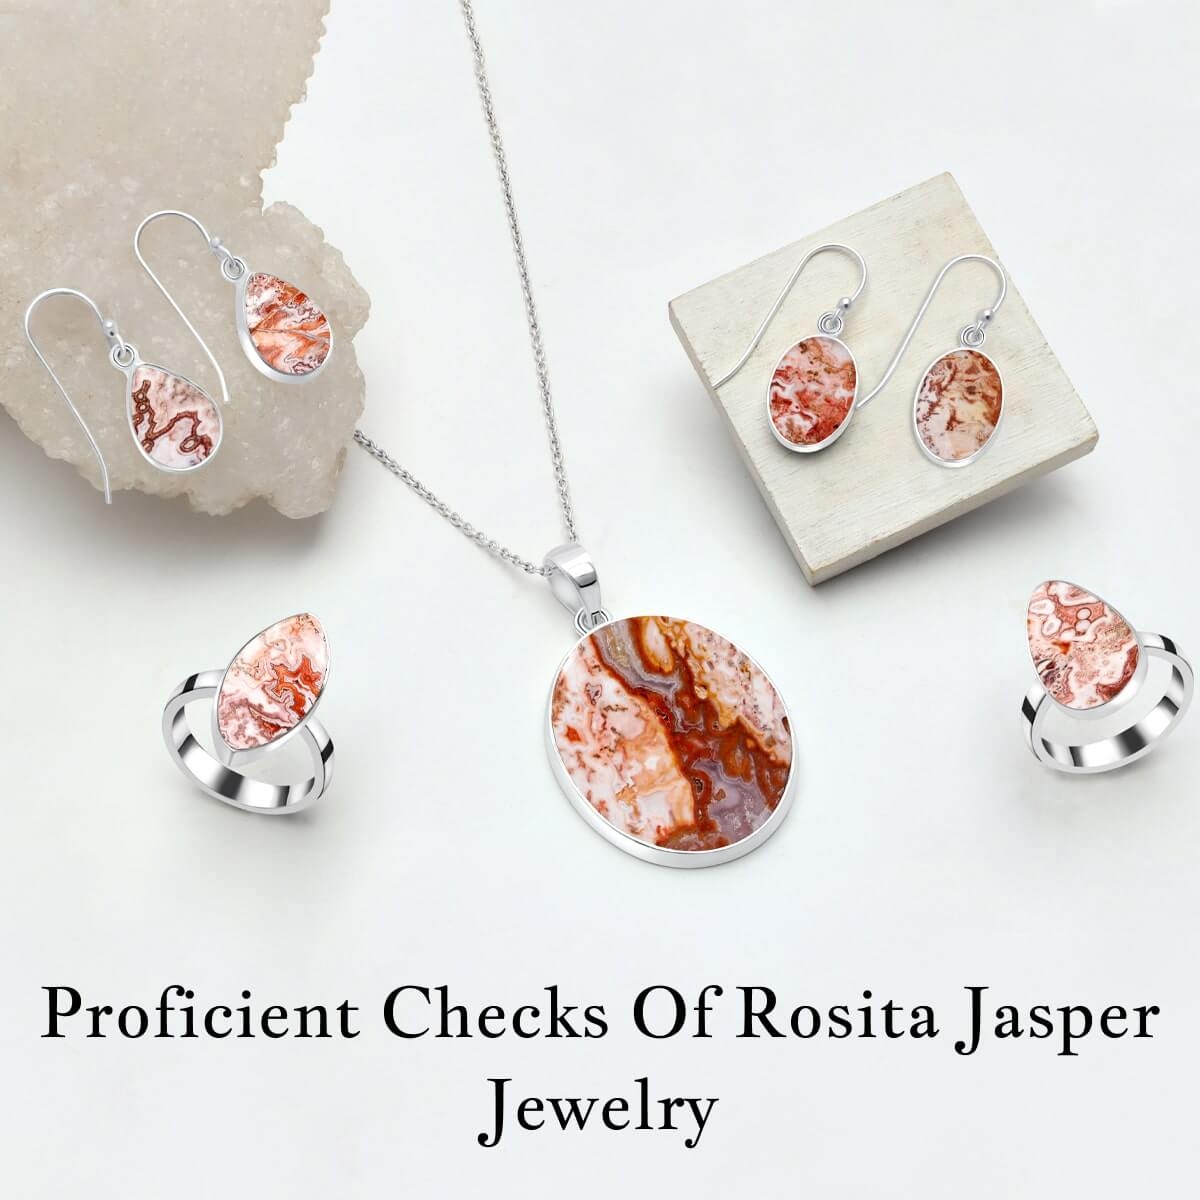 Benefits of Rosita Jasper Jewelry